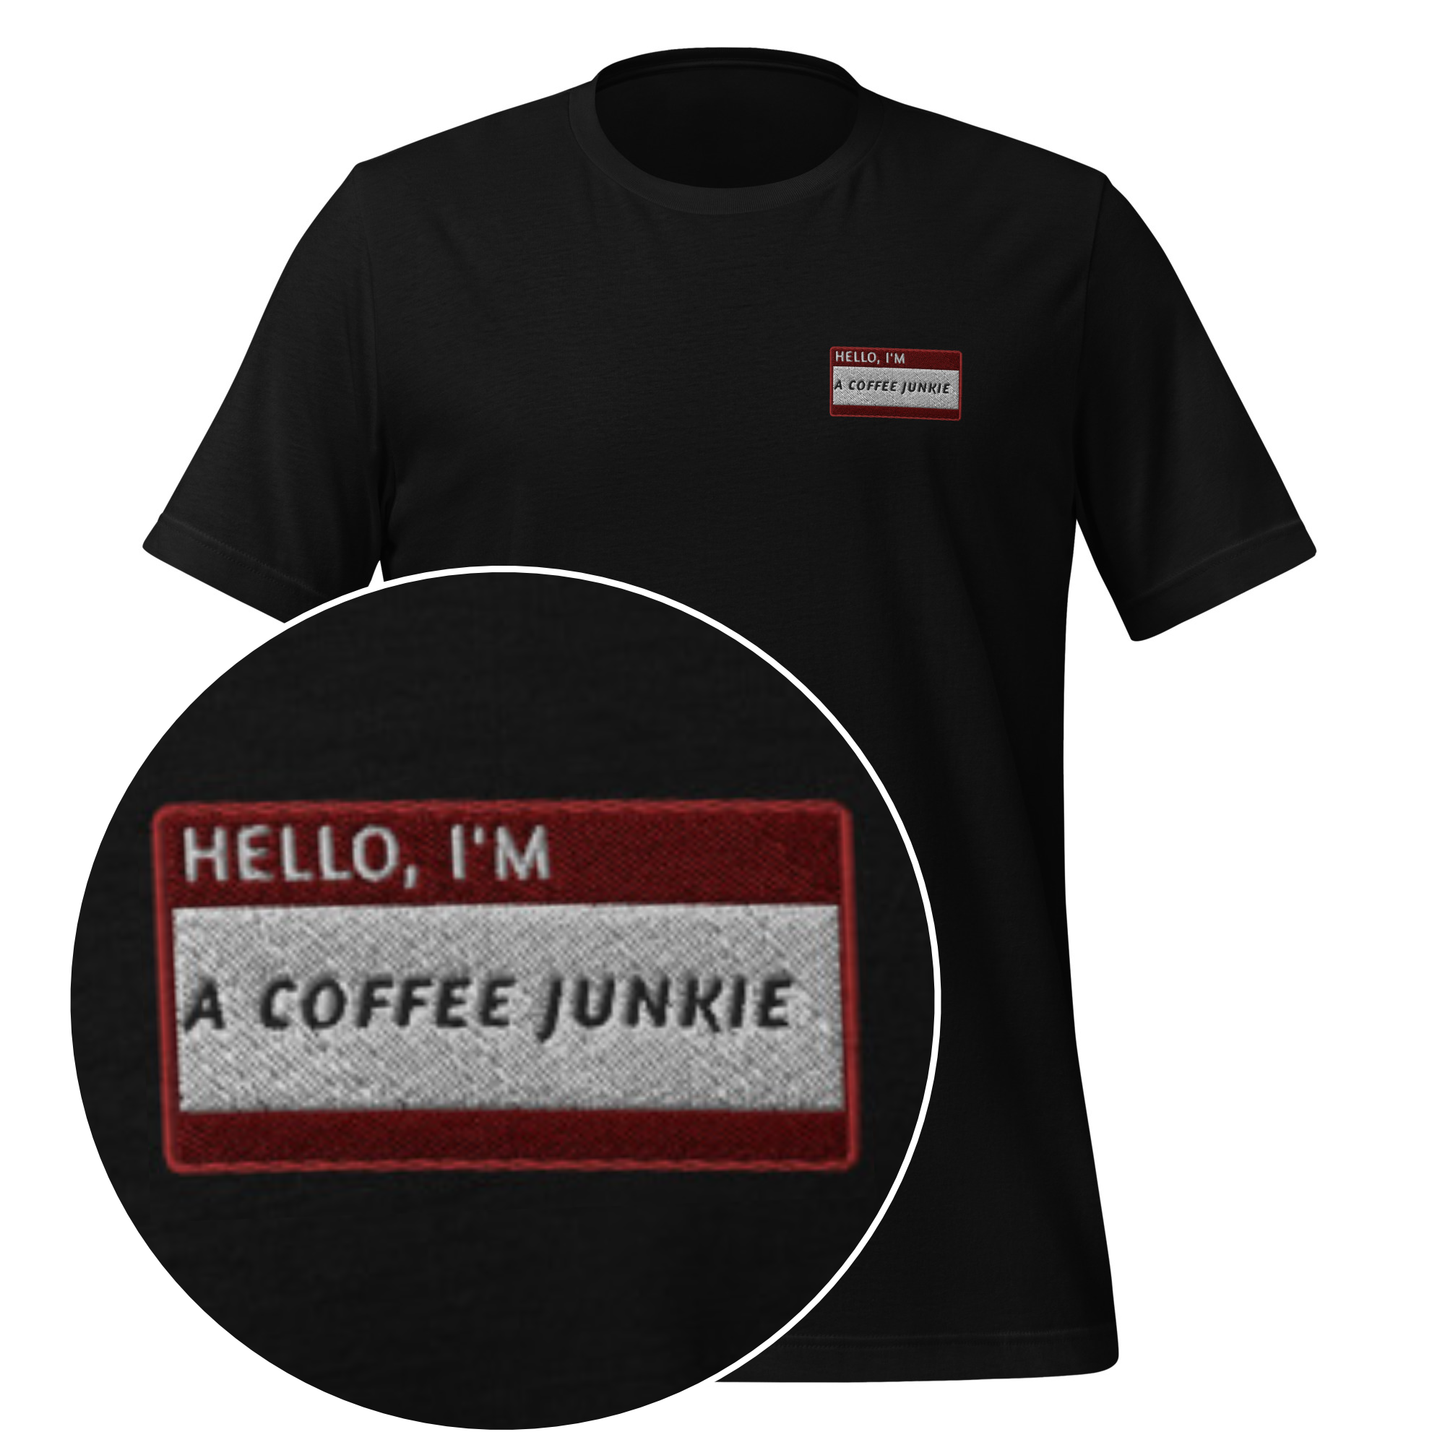 HELLO I'M A COFFEE JUNKIE - Name Tag T-Shirt